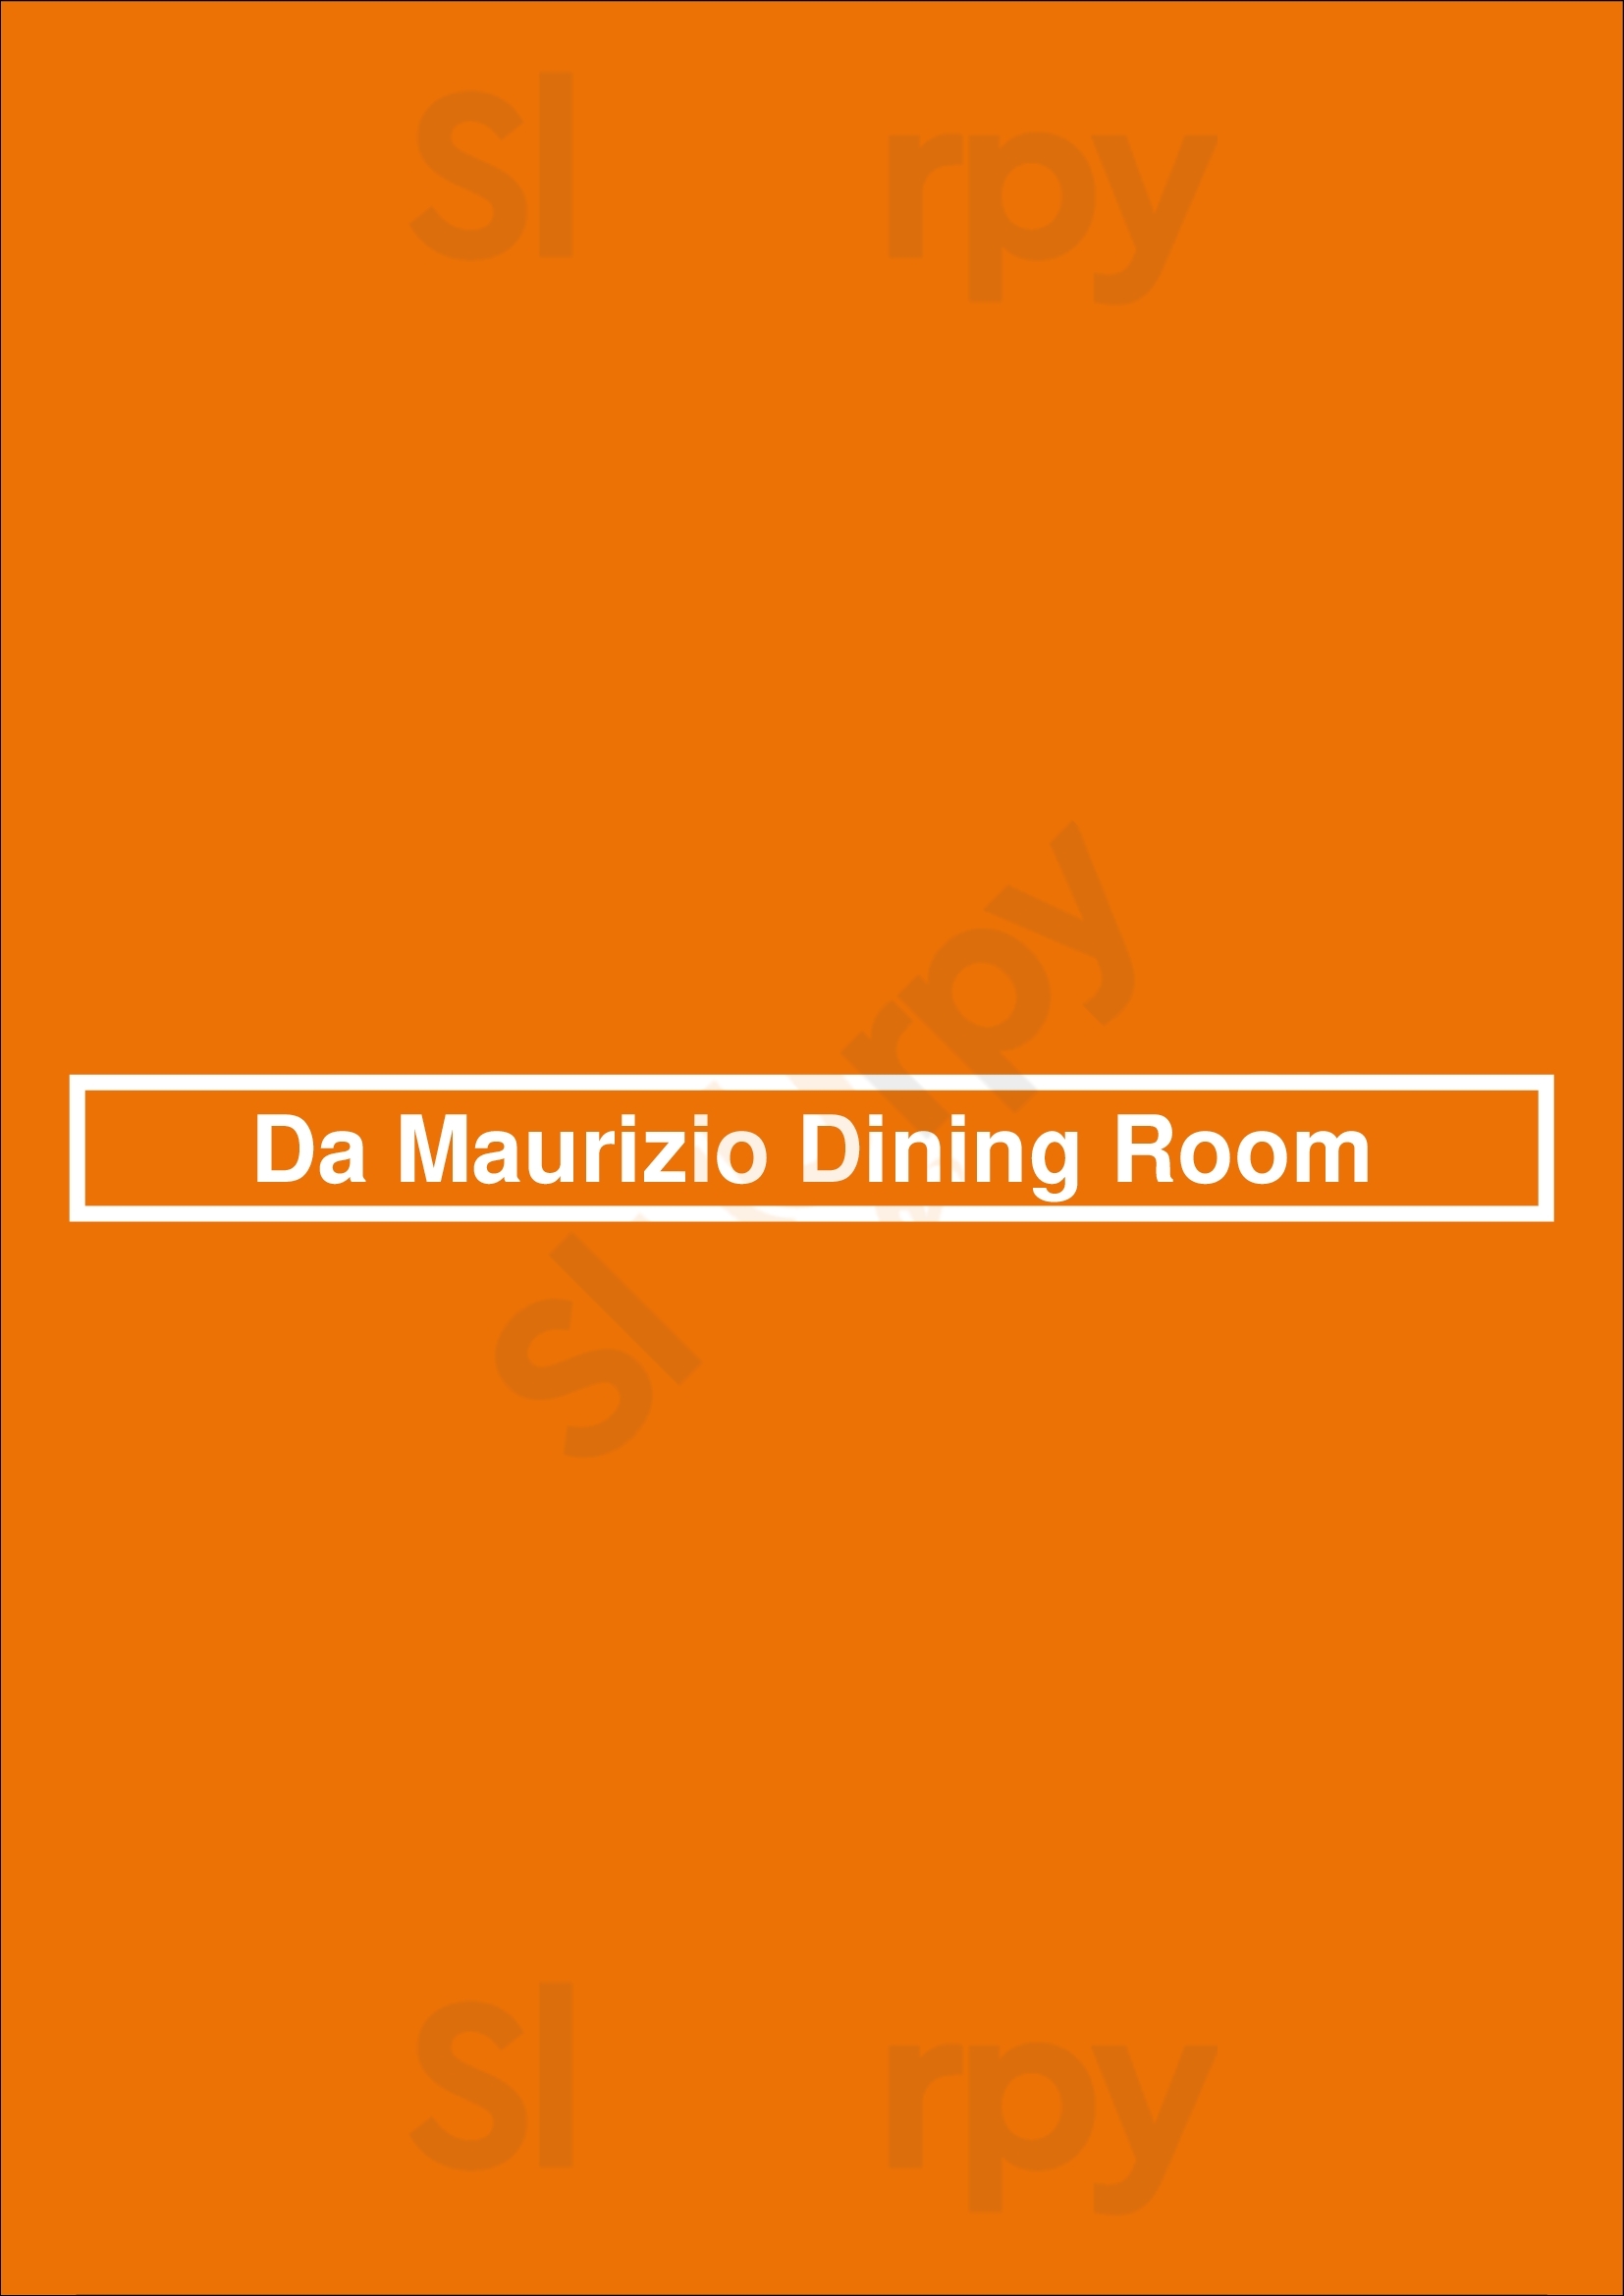 Da Maurizio Dining Room Halifax Menu - 1